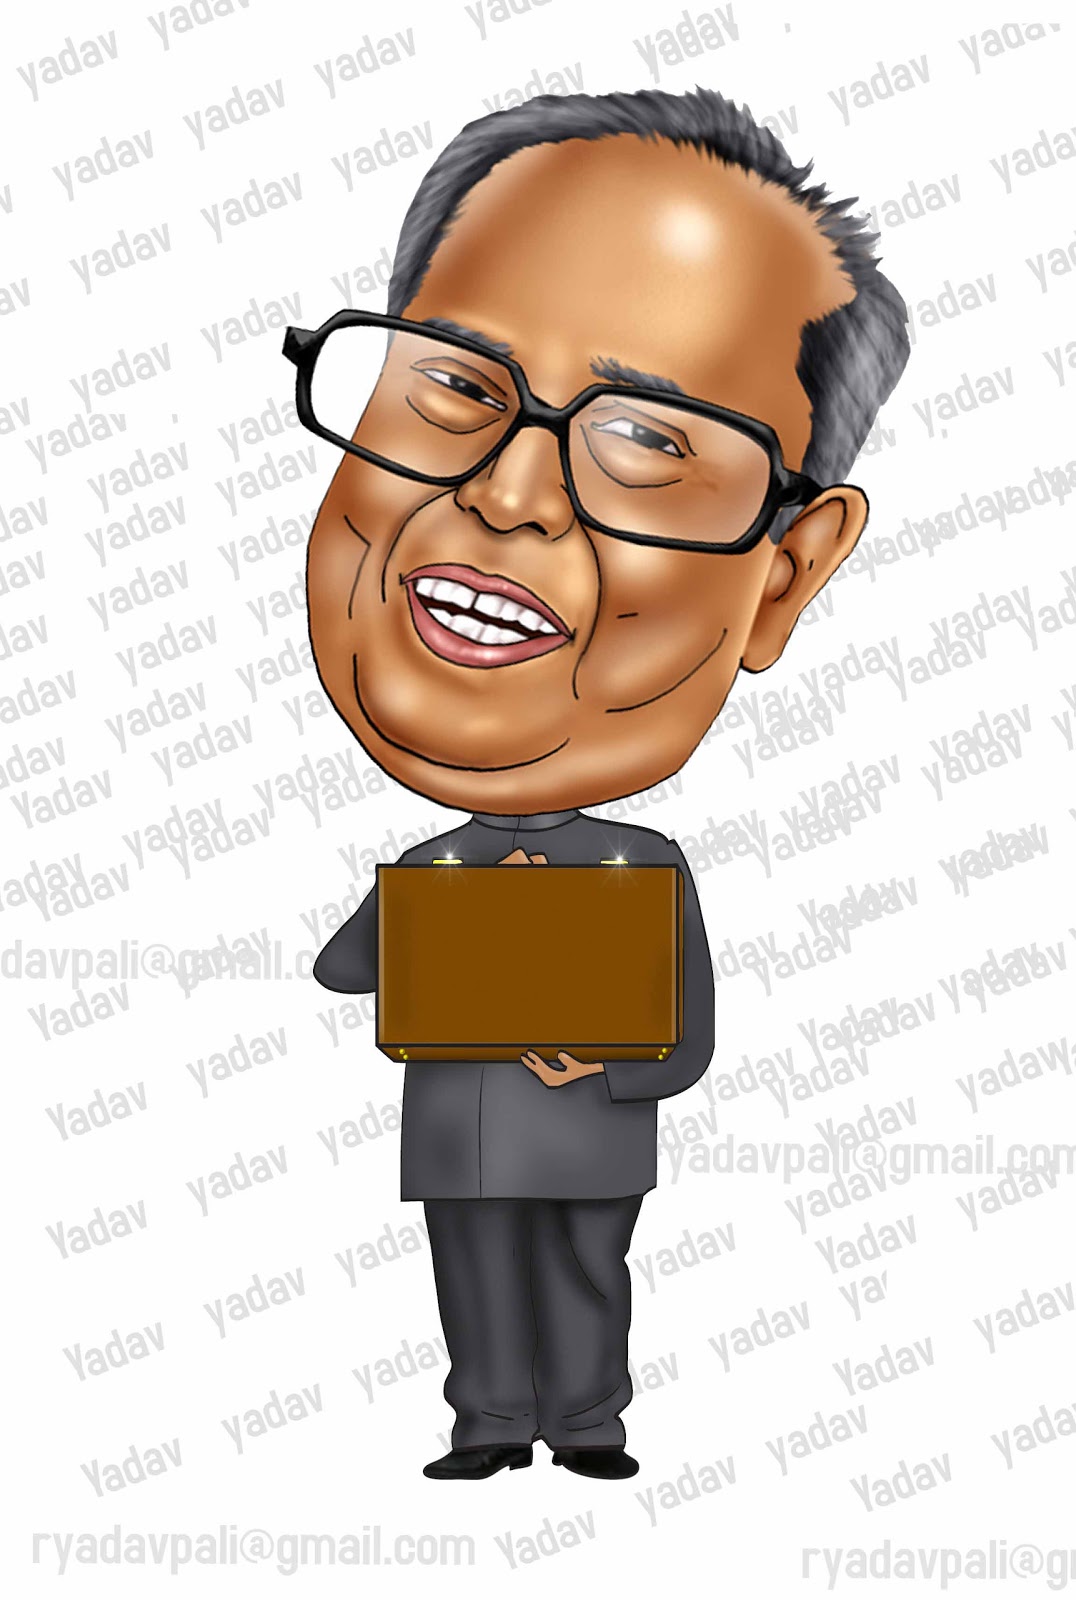 indian caricature: pranab mukherjee caricature and cartoon